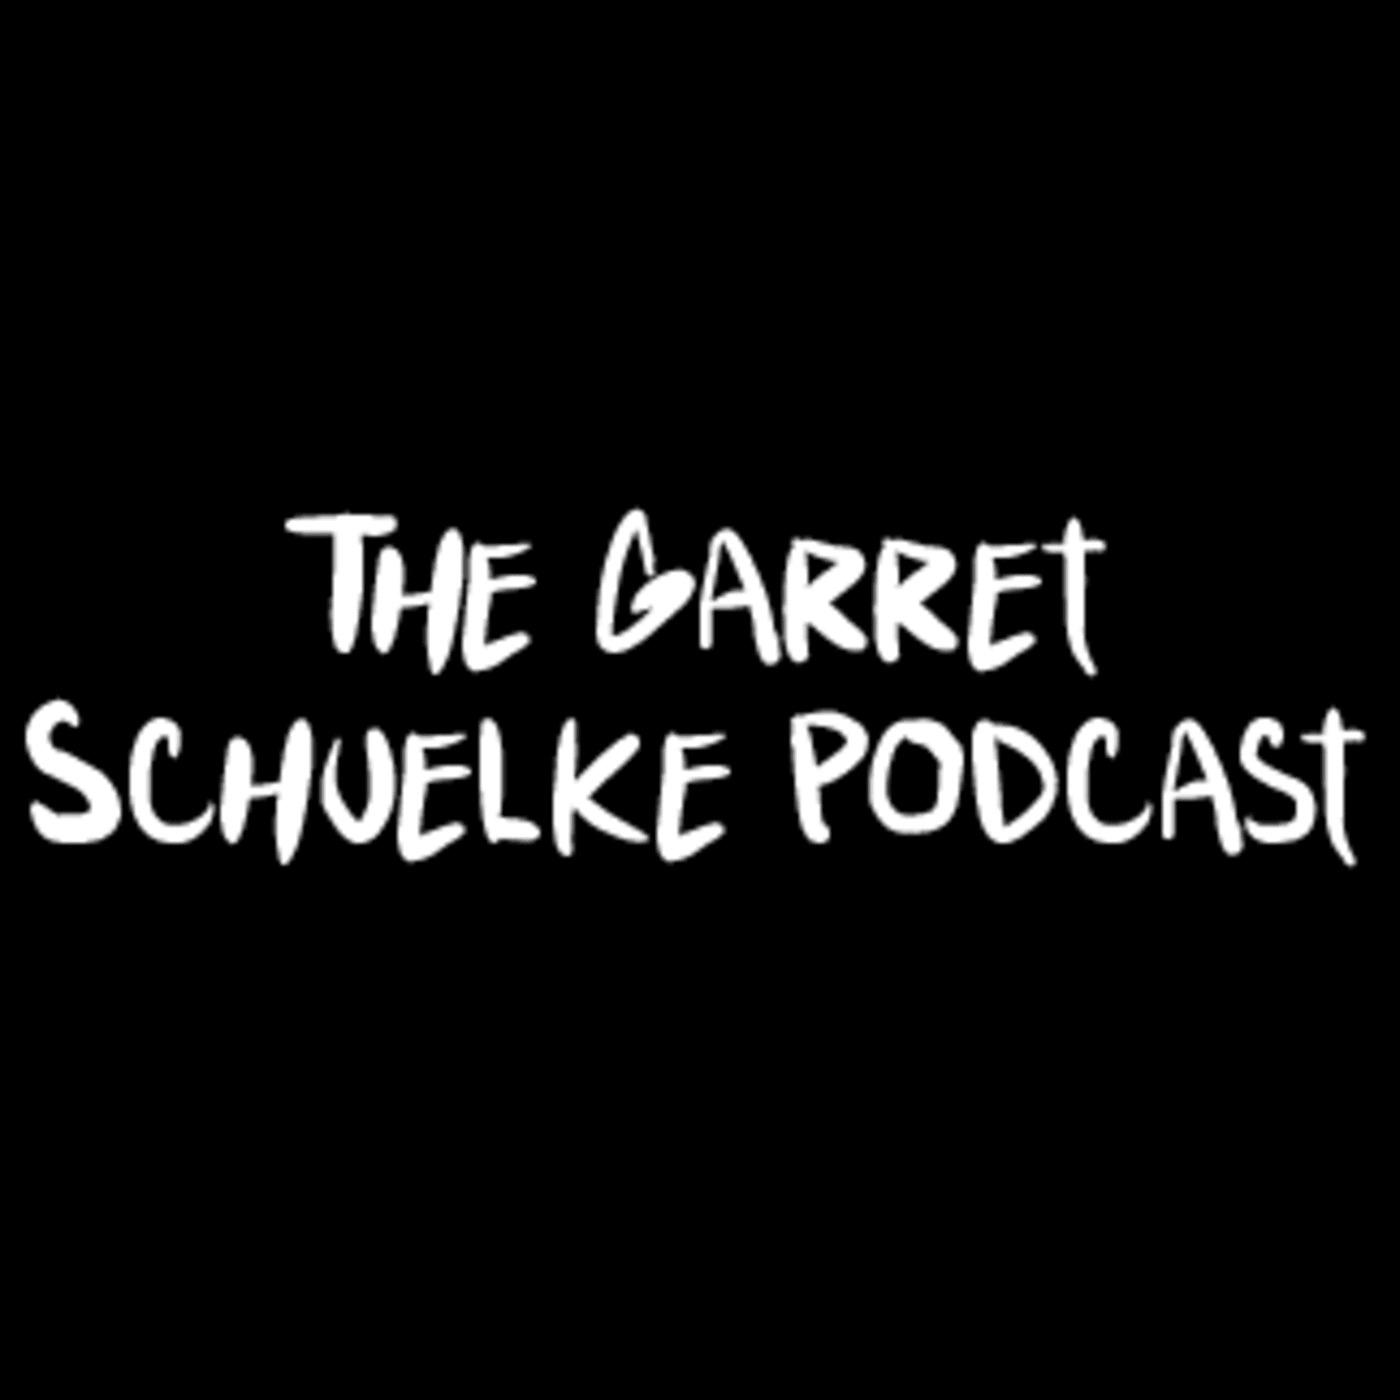 The Garret Schuelke Podcast